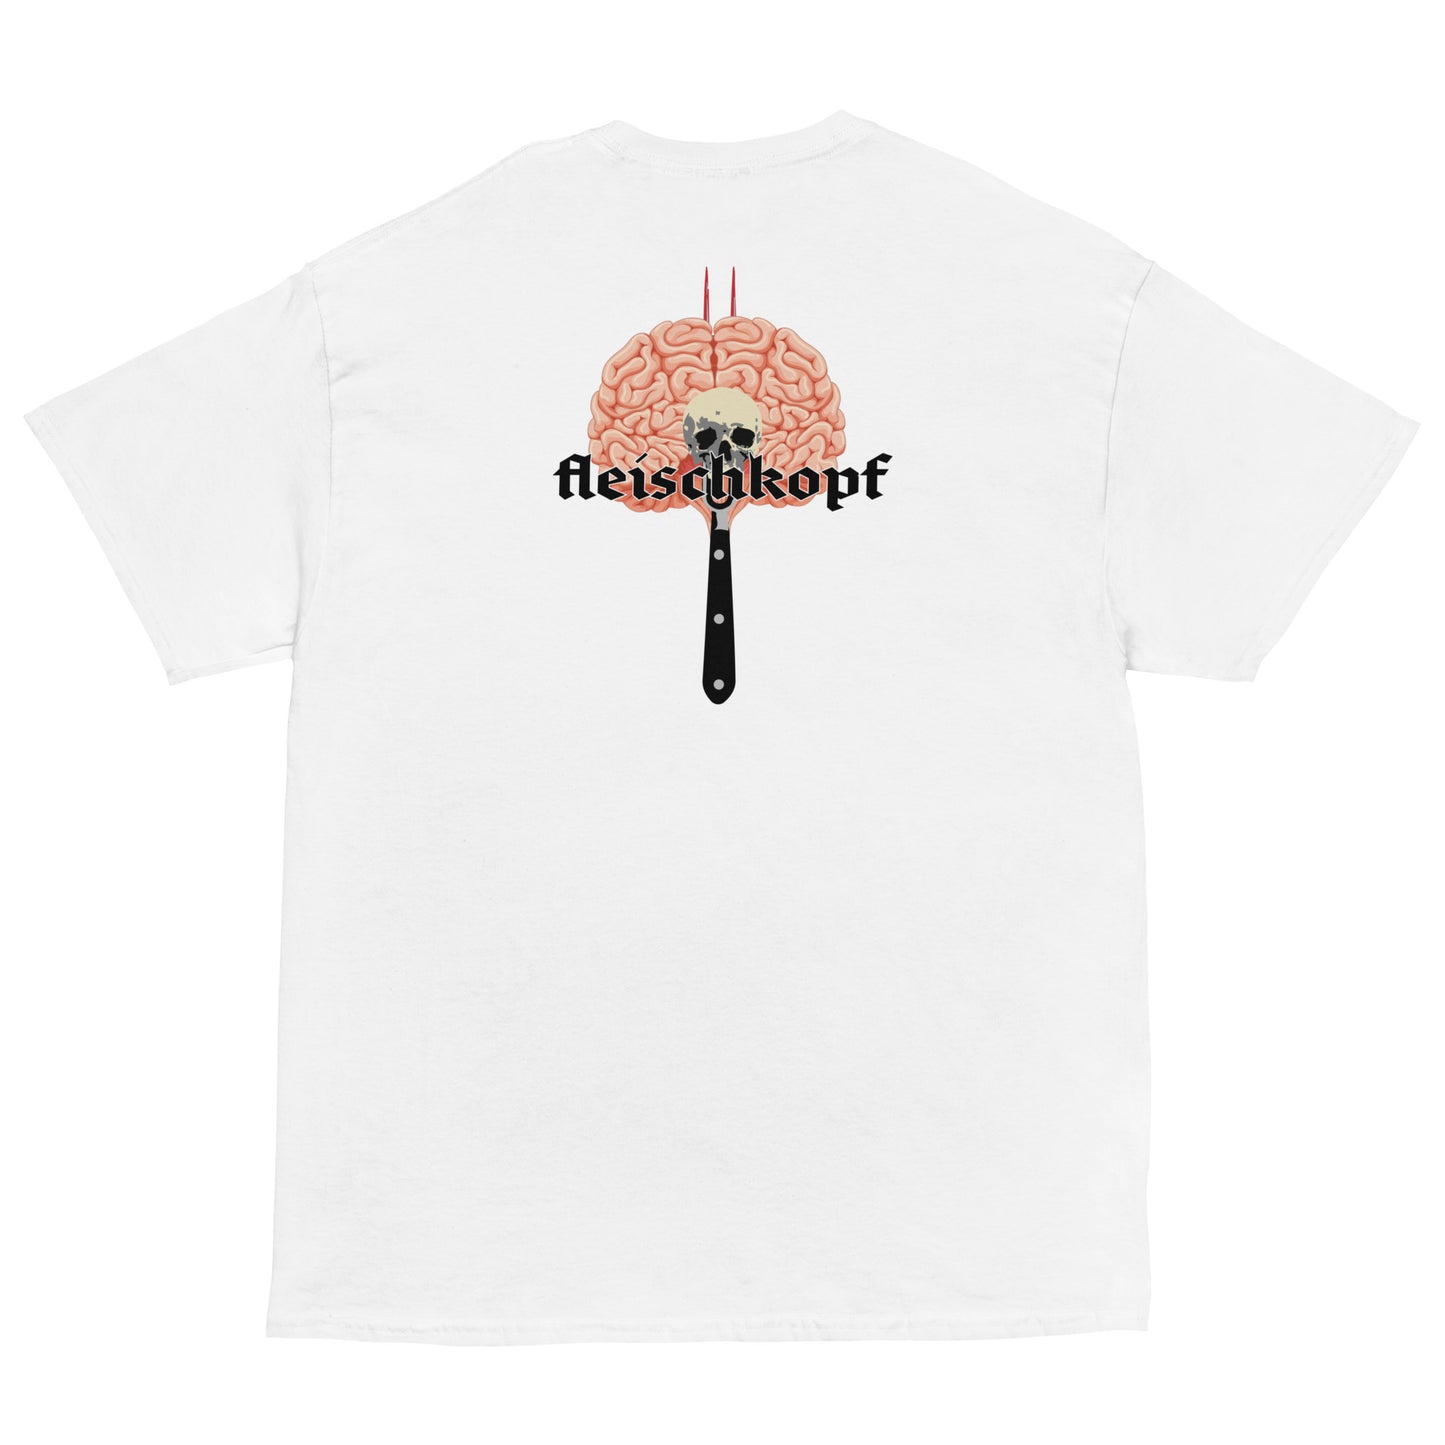 FLEISCHKOPF - FLAMING SKULL - Men's classic T-shirt